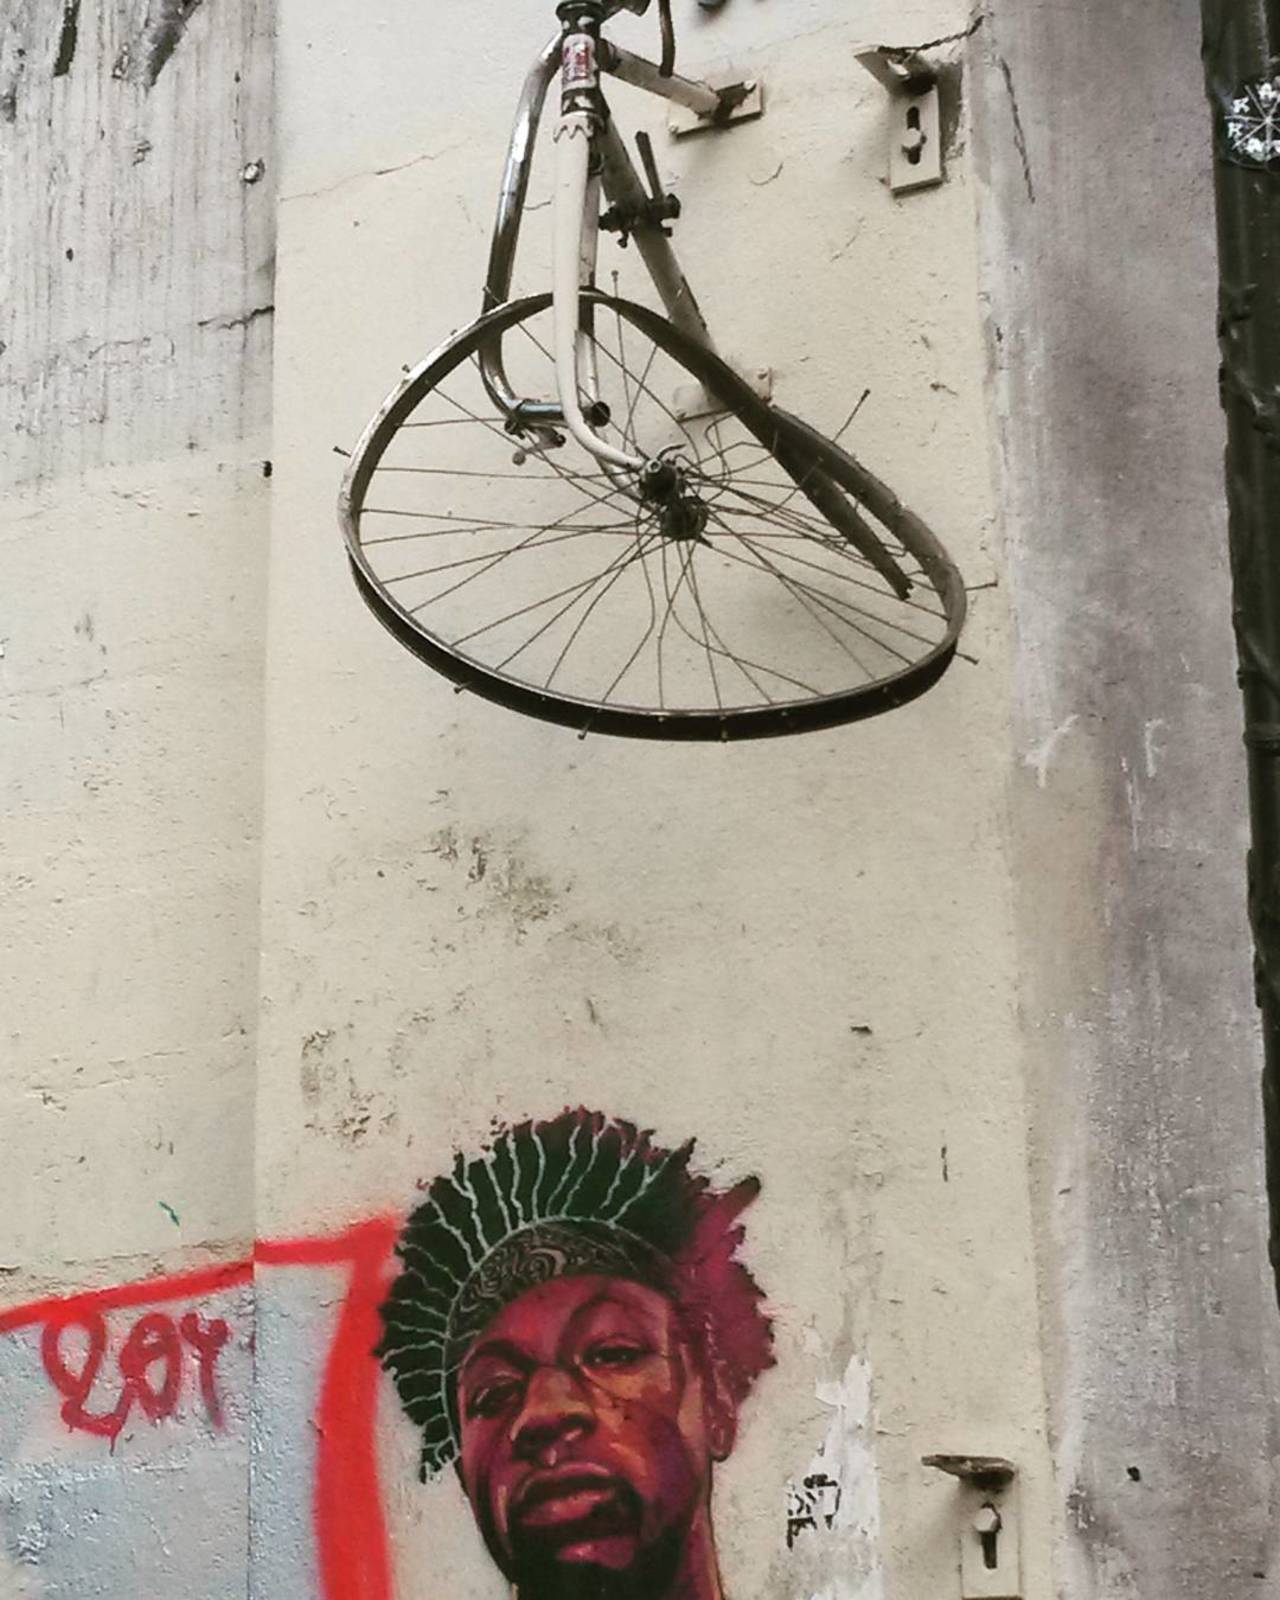 #Paris #graffiti photo by @le_cyclopede http://ift.tt/1OCIlYQ #StreetArt http://t.co/lUyYEWP17B